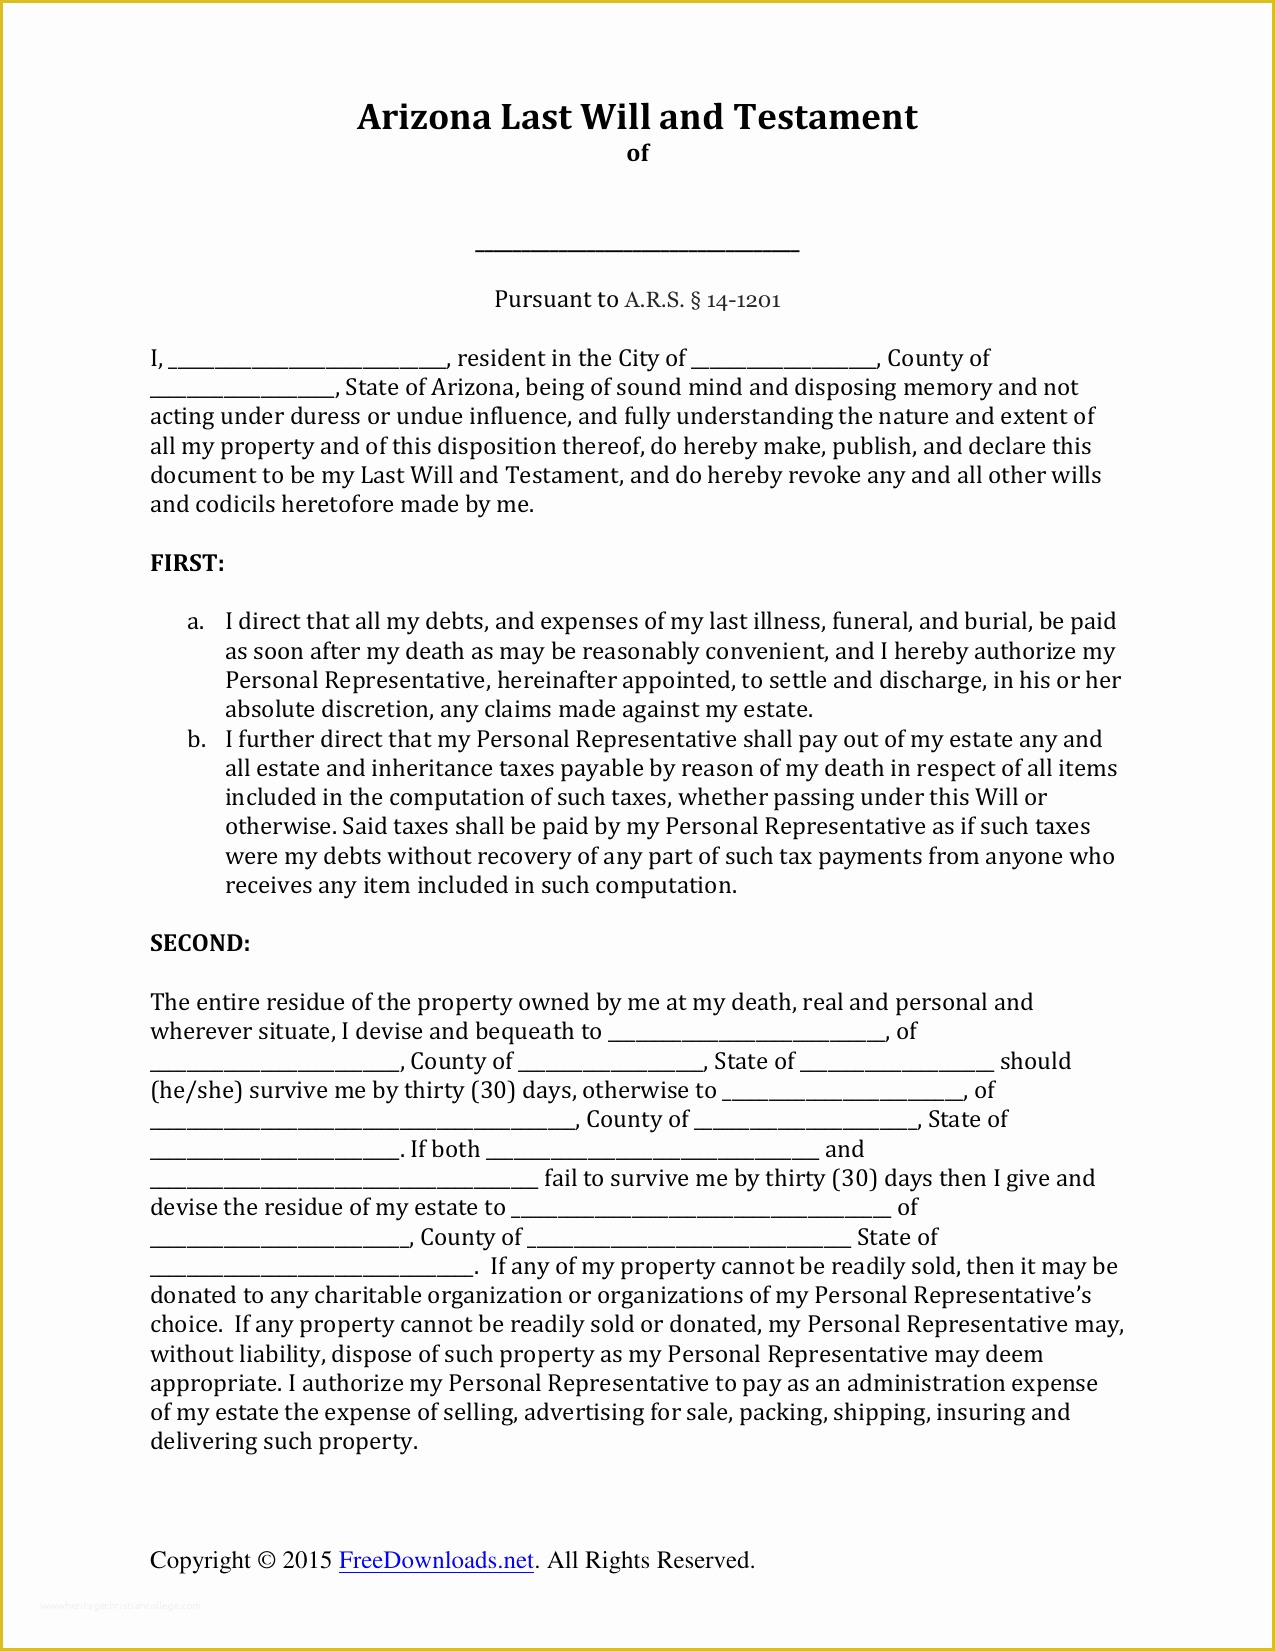 California Last Will and Testament Free Template Of Download Arizona Last Will and Testament form Pdf